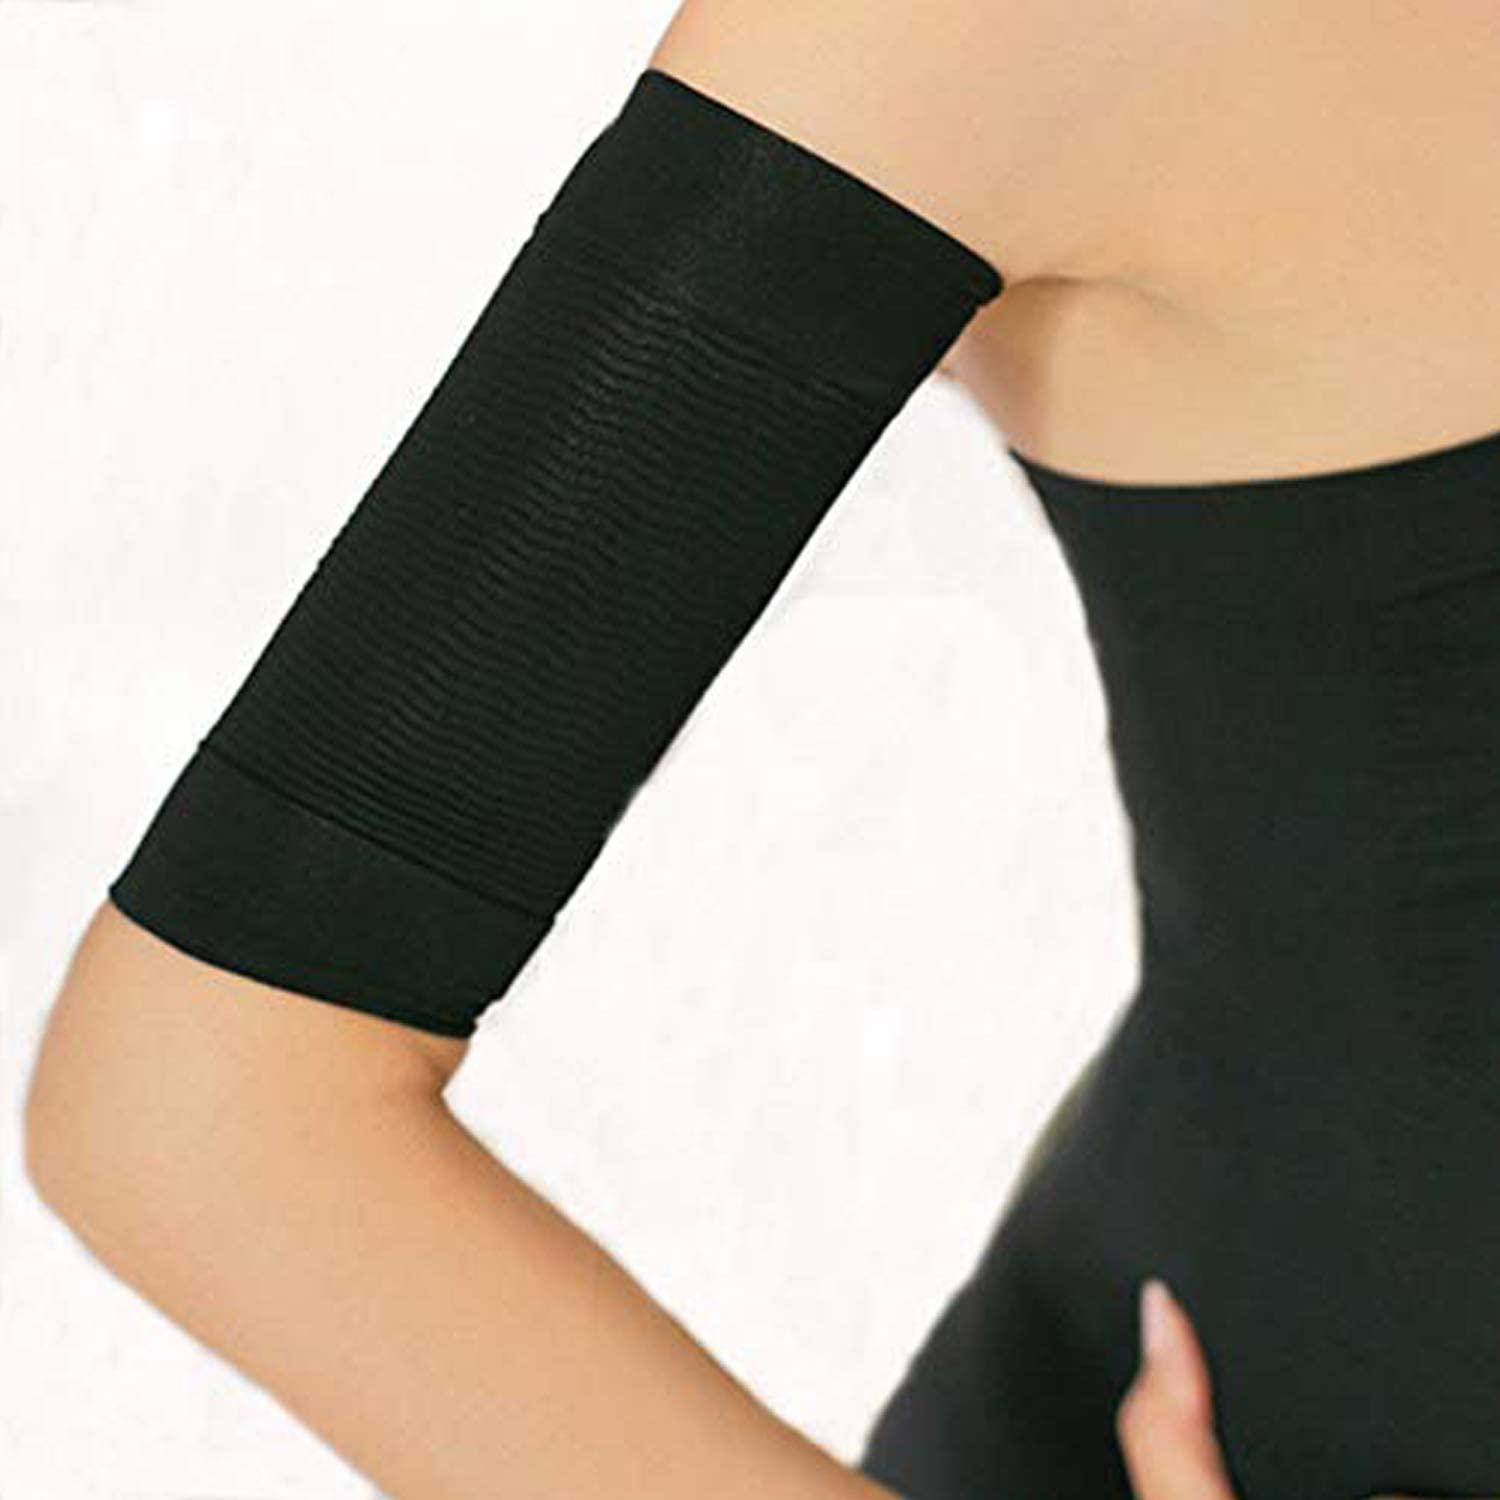 Lizkole Arm Shaper Quality Black and Beige Stretchable Arm Fat